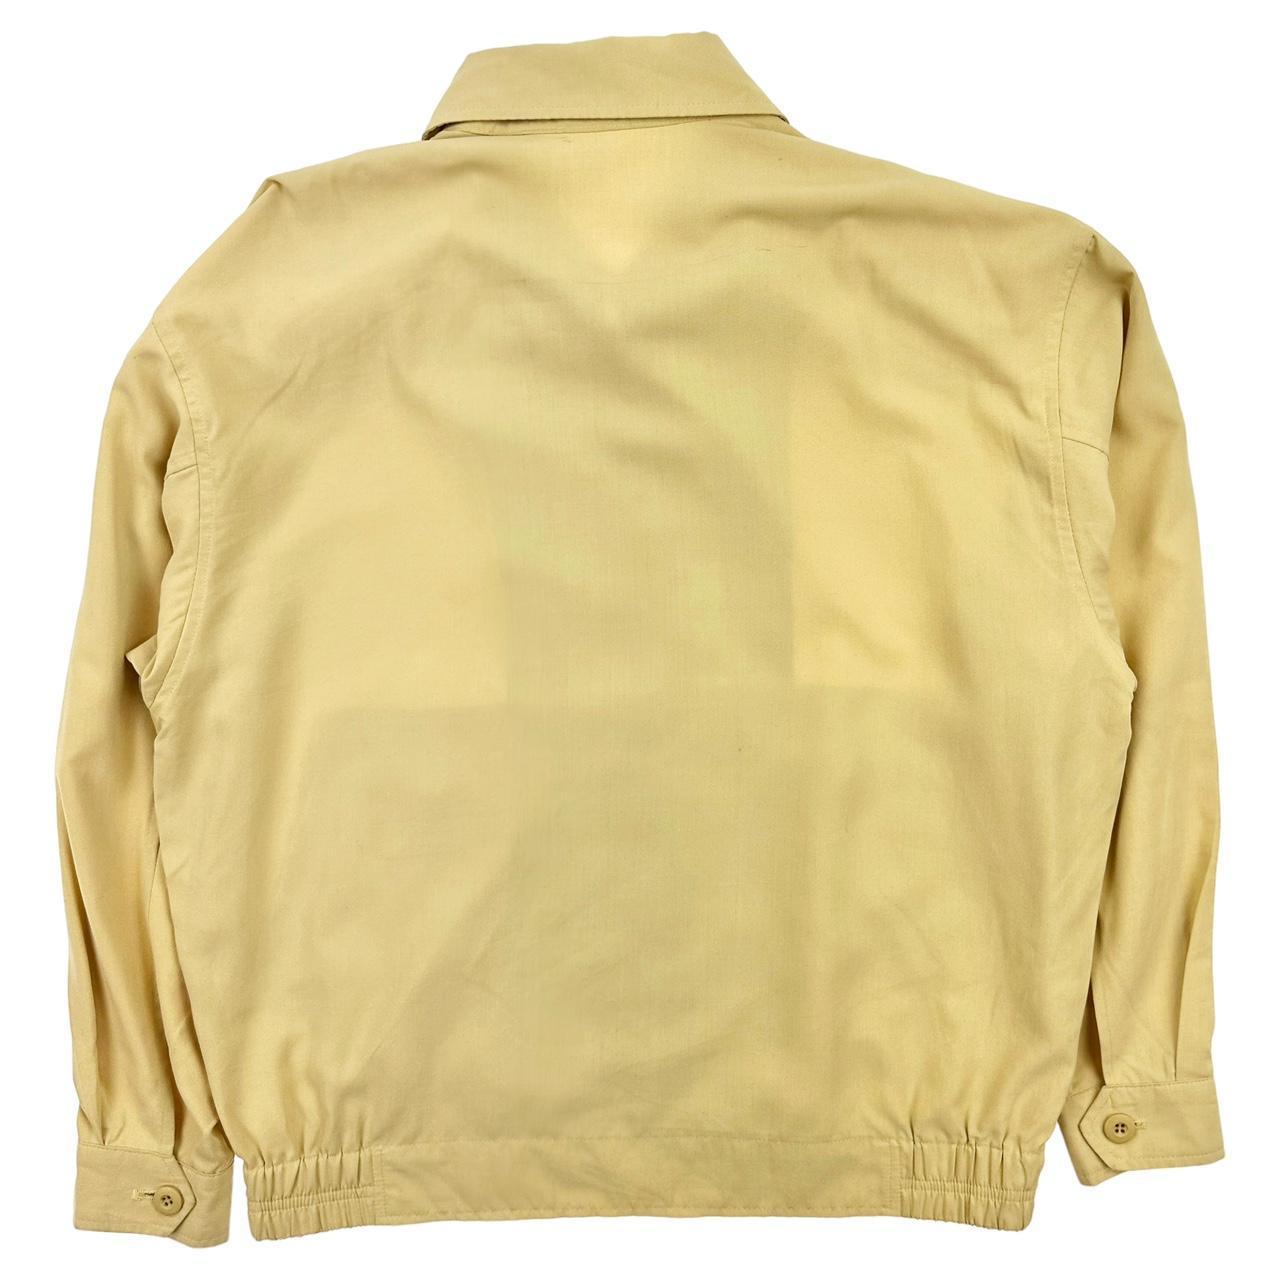 Vintage YSL Yves Saint Laurent Harrington jacket size S - Known Source